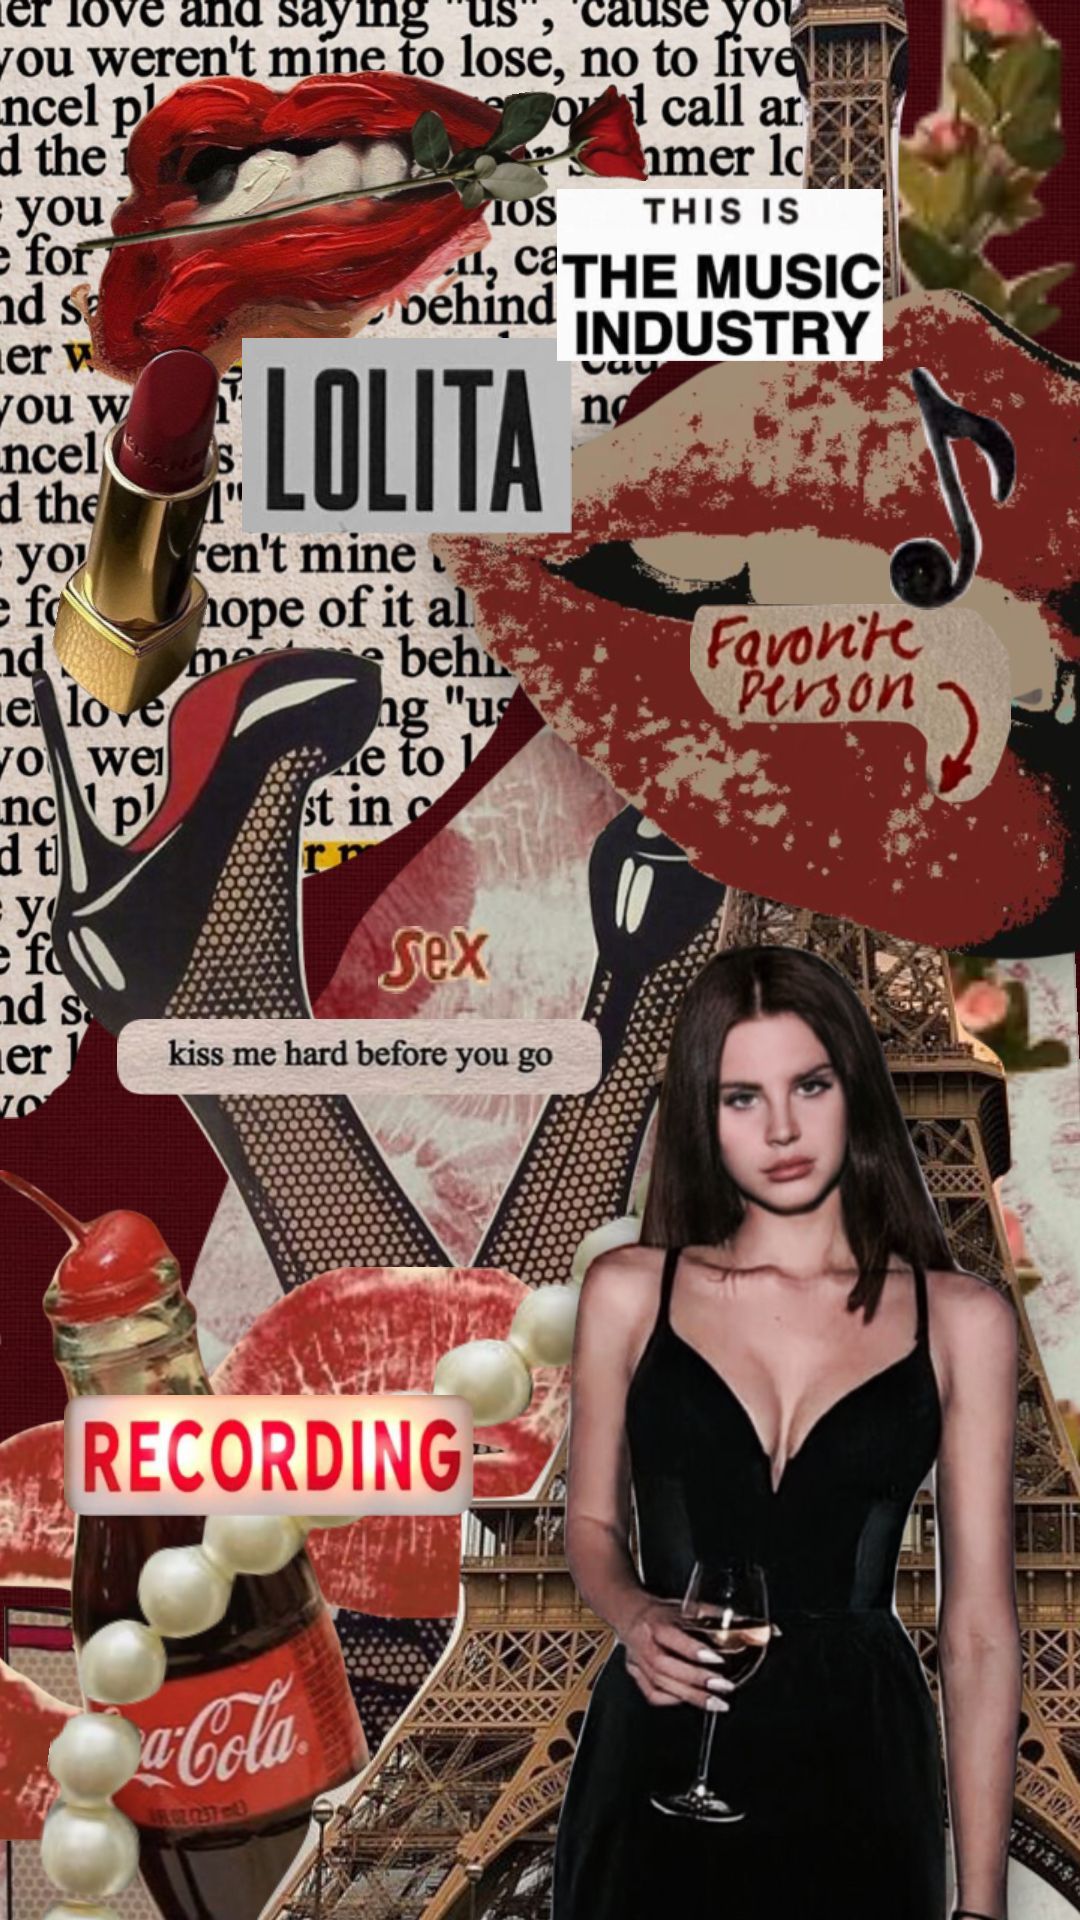 lana del rey #lana #lanadelrey #coquette # aesthetic #downtowngirl #cherry #cola #vintage #red